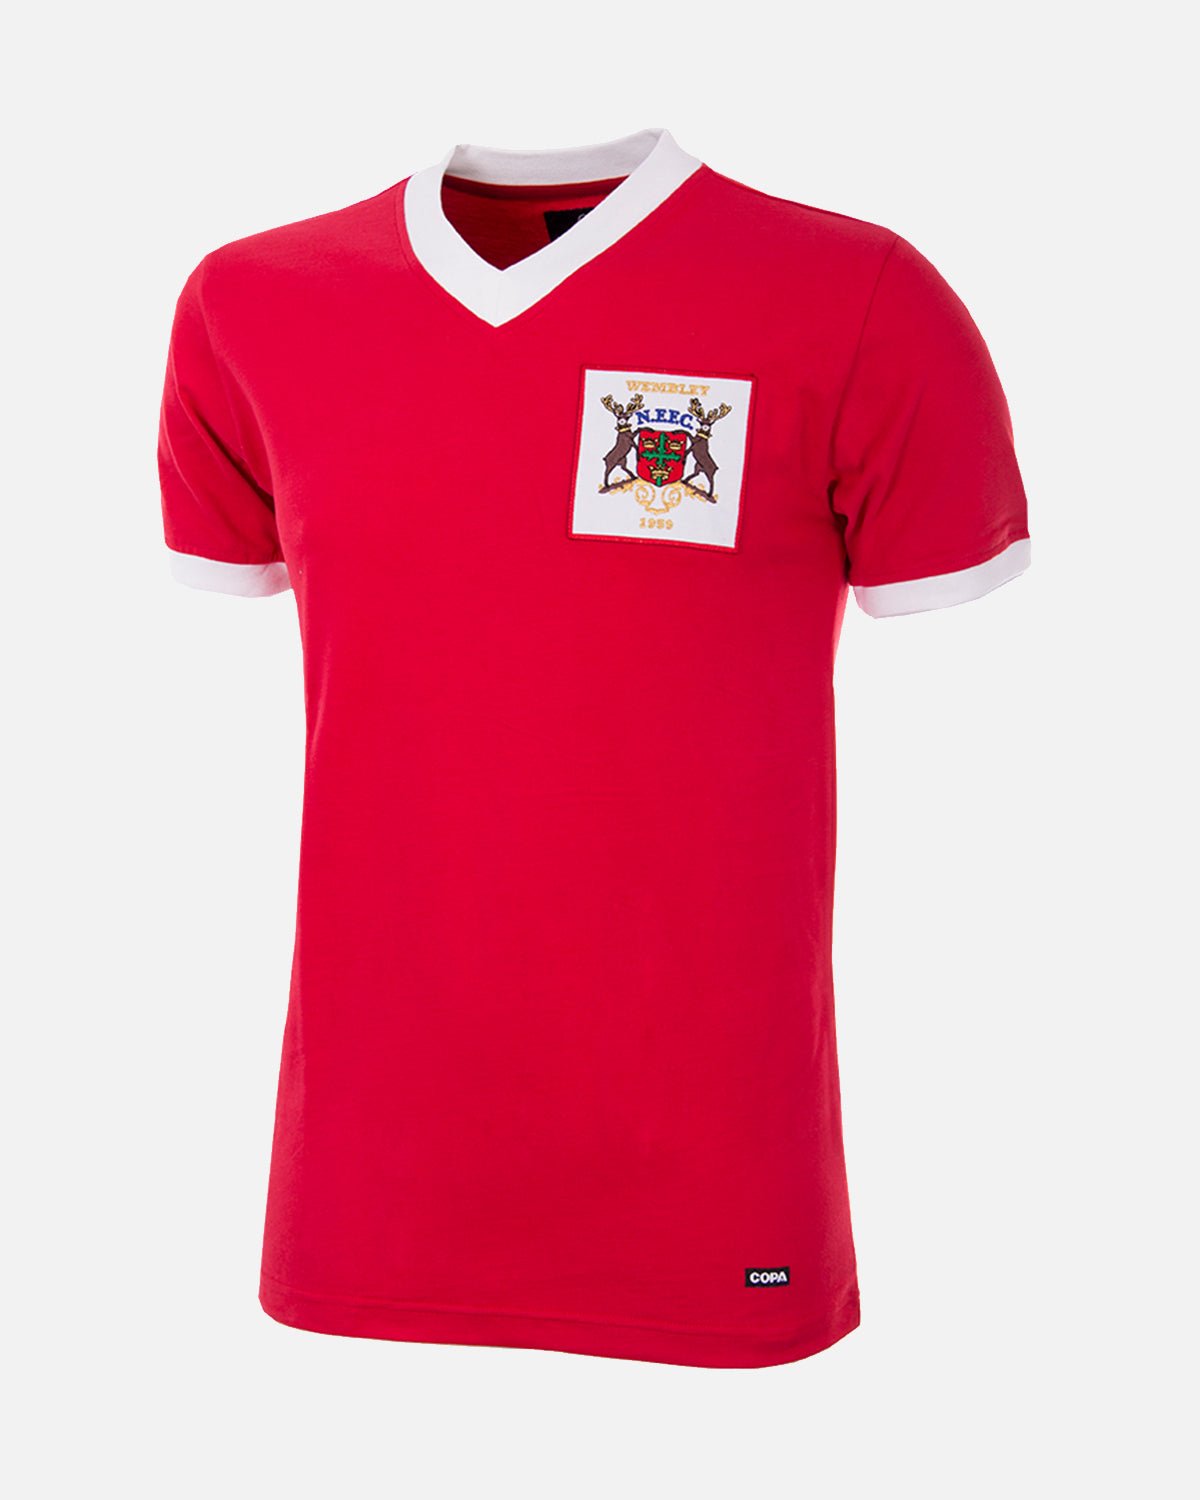 NFFC Retro 1959 Home Shirt - Nottingham Forest FC